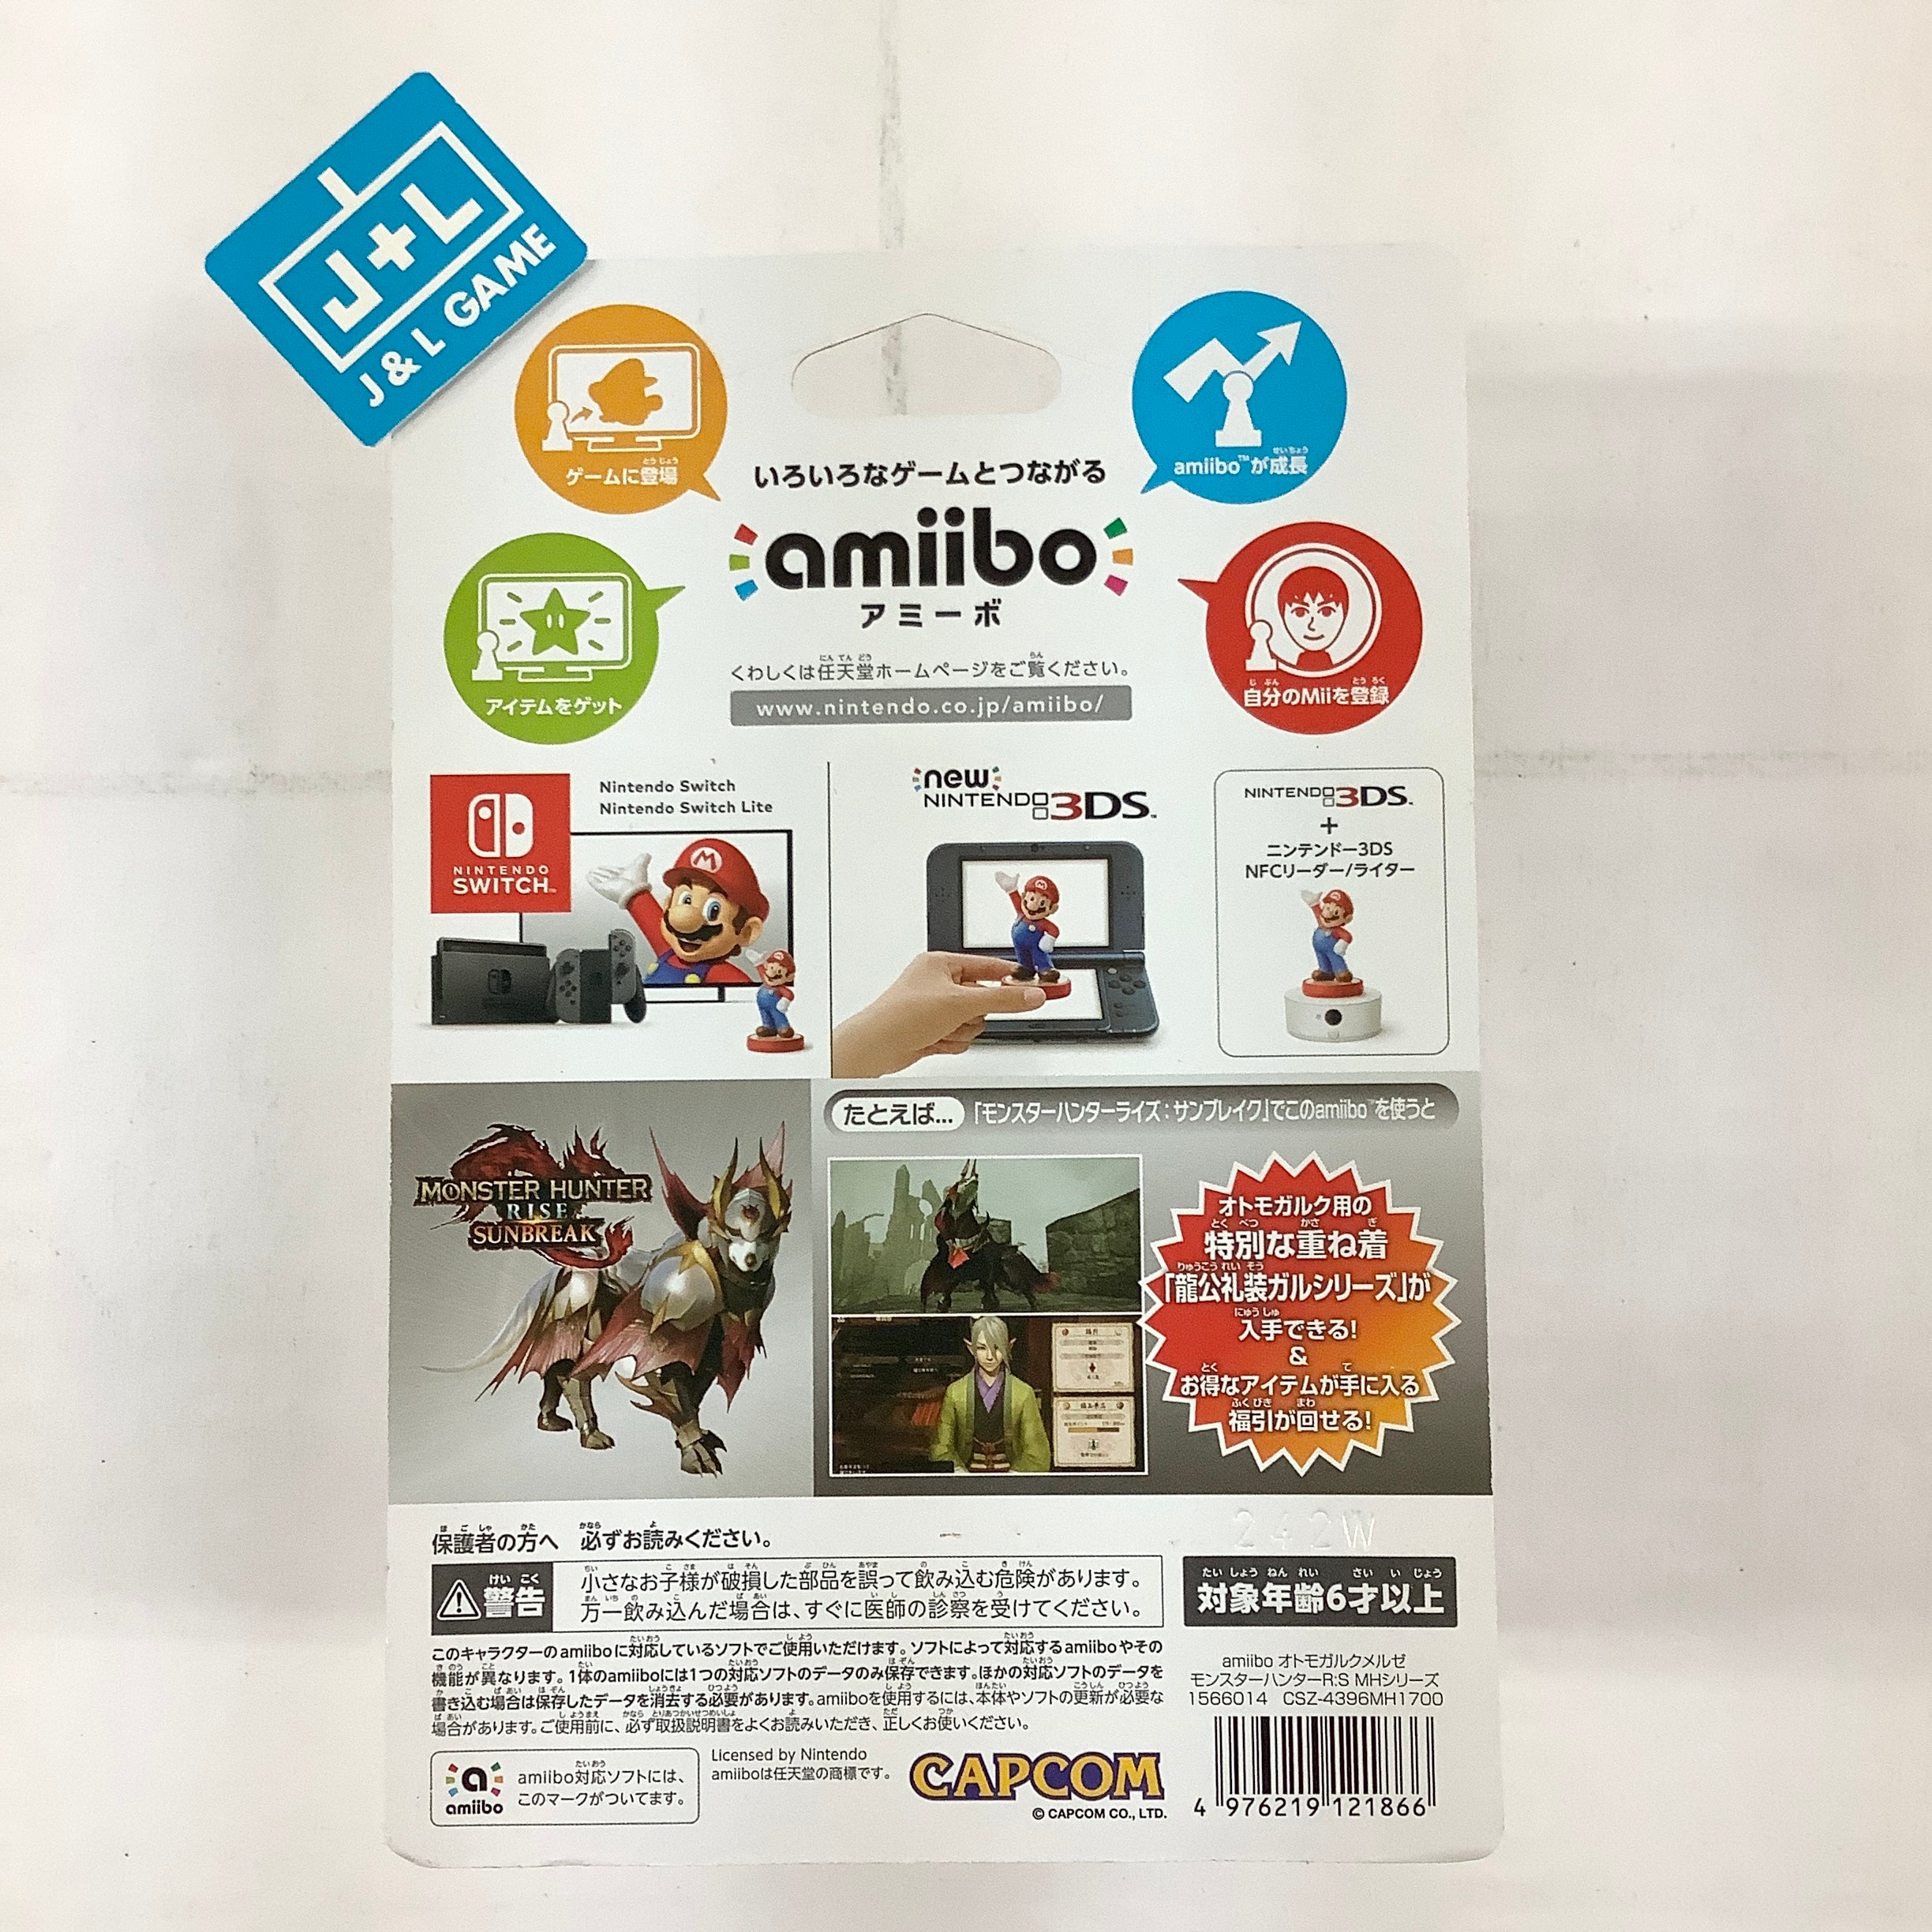 Otomo Garuku (Monster Hunter Rise Sunbreak) - Nintendo Switch Amiibo (Japanese Import) Amiibo Nintendo   